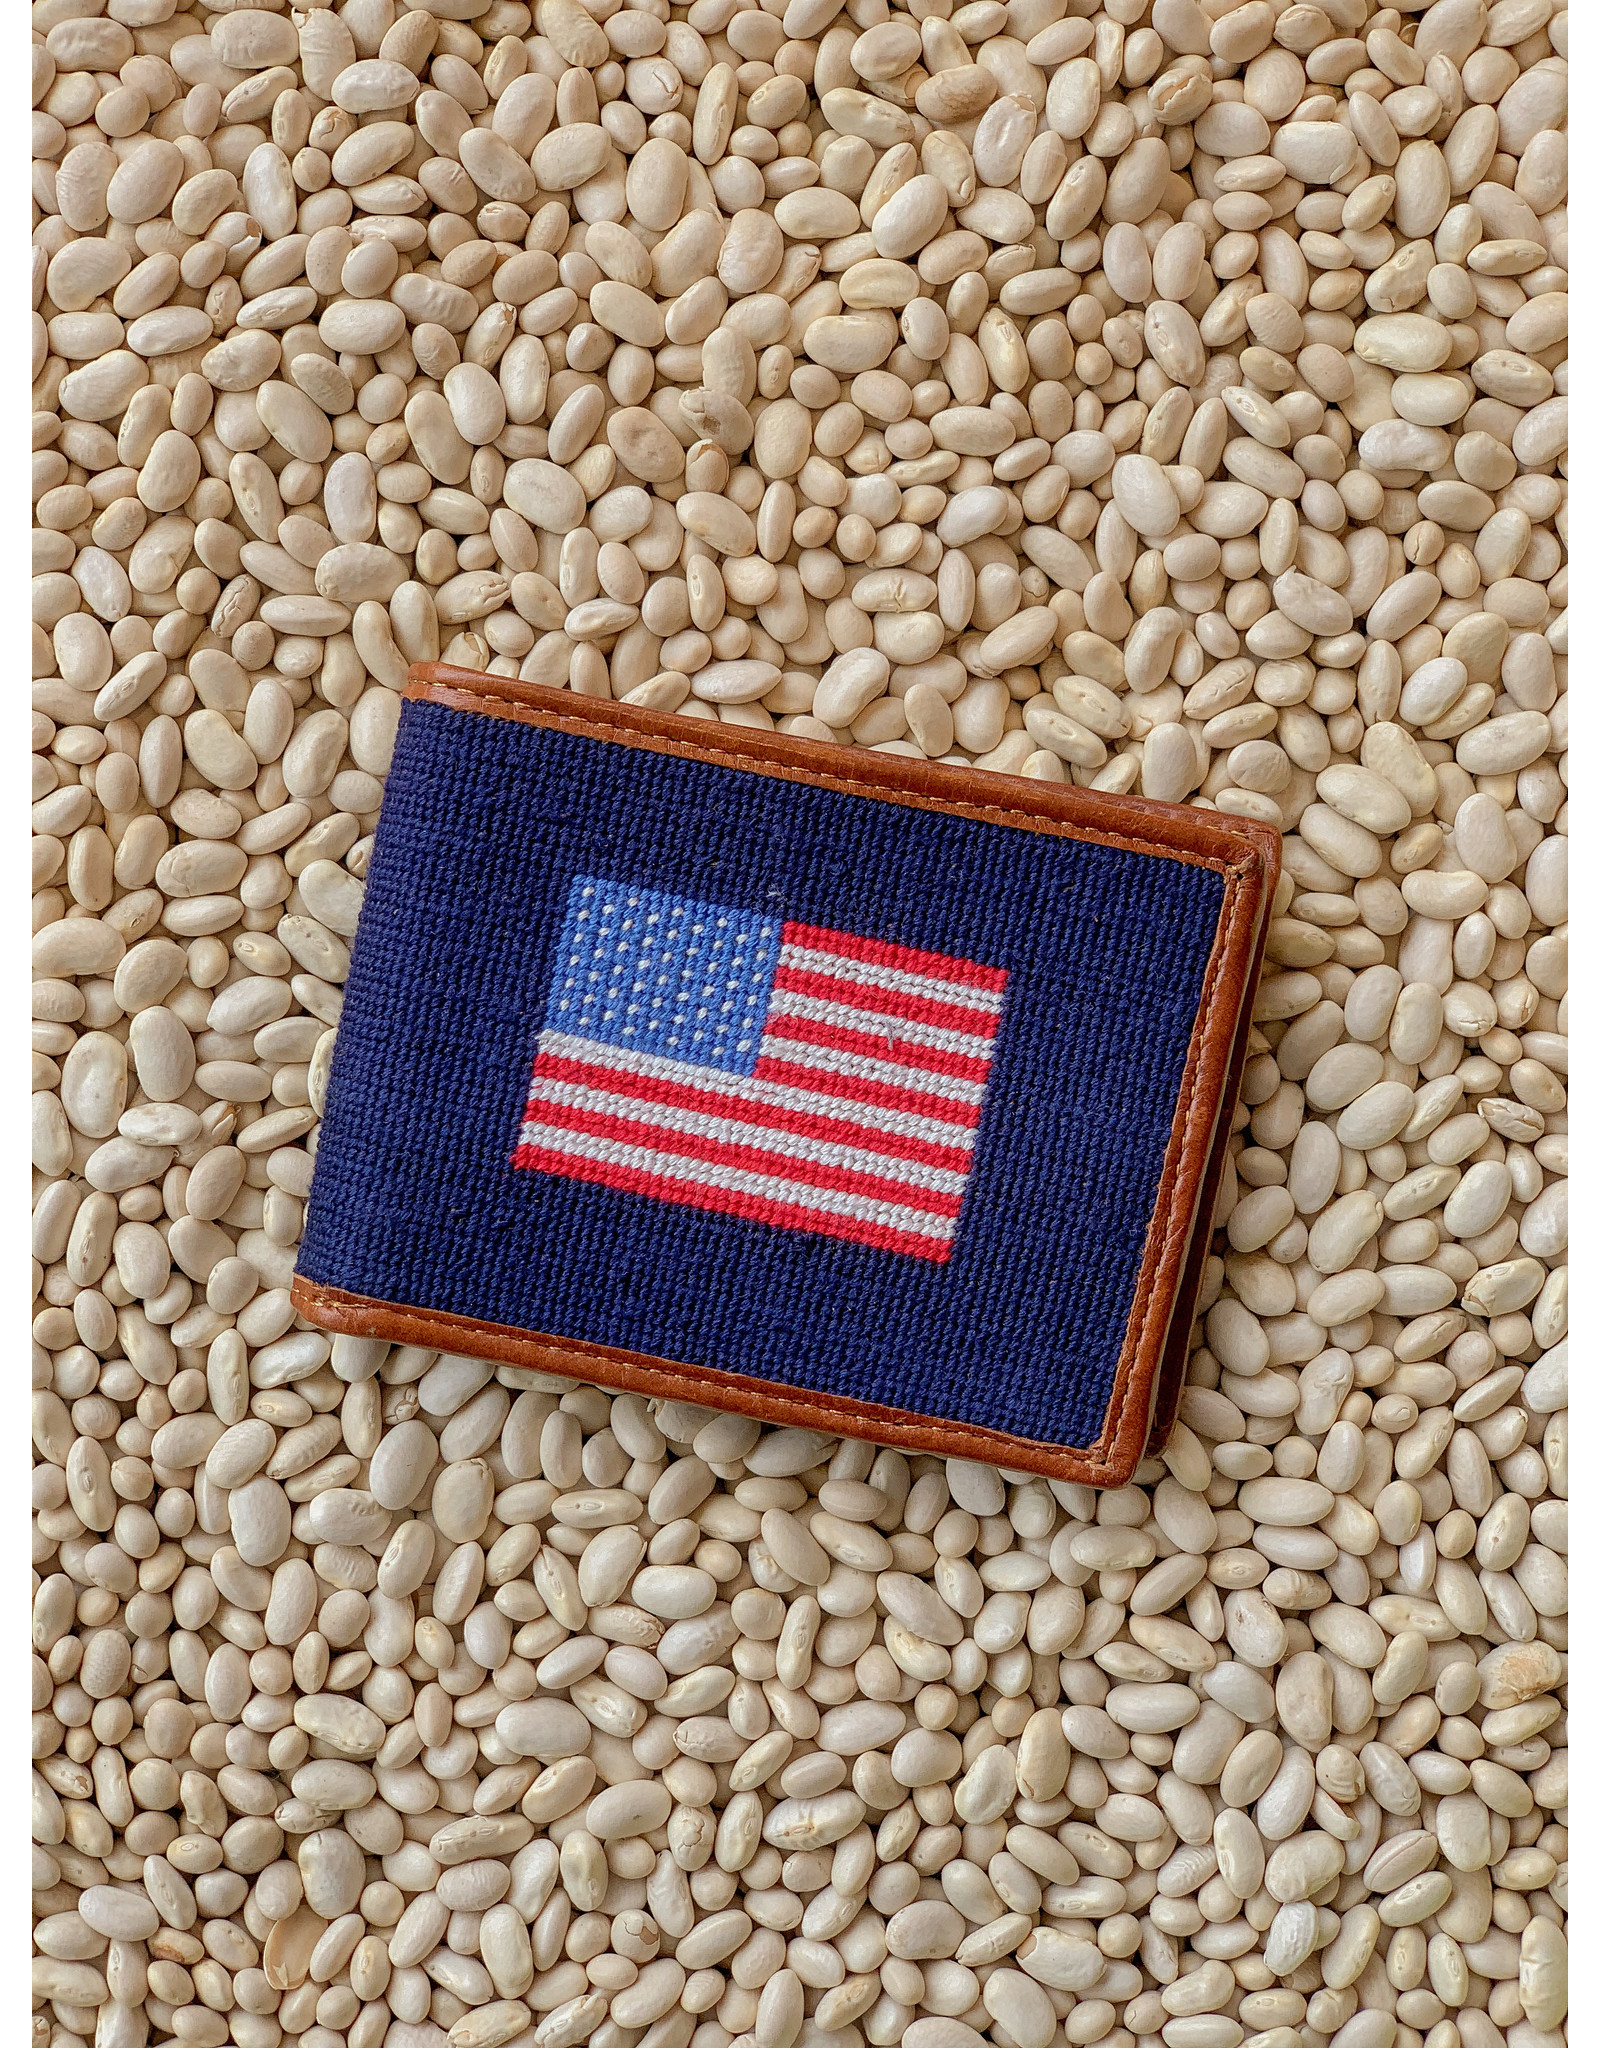 Smathers & Branson S&B Needlepoint Bi-fold Wallet, American Flag on Navy